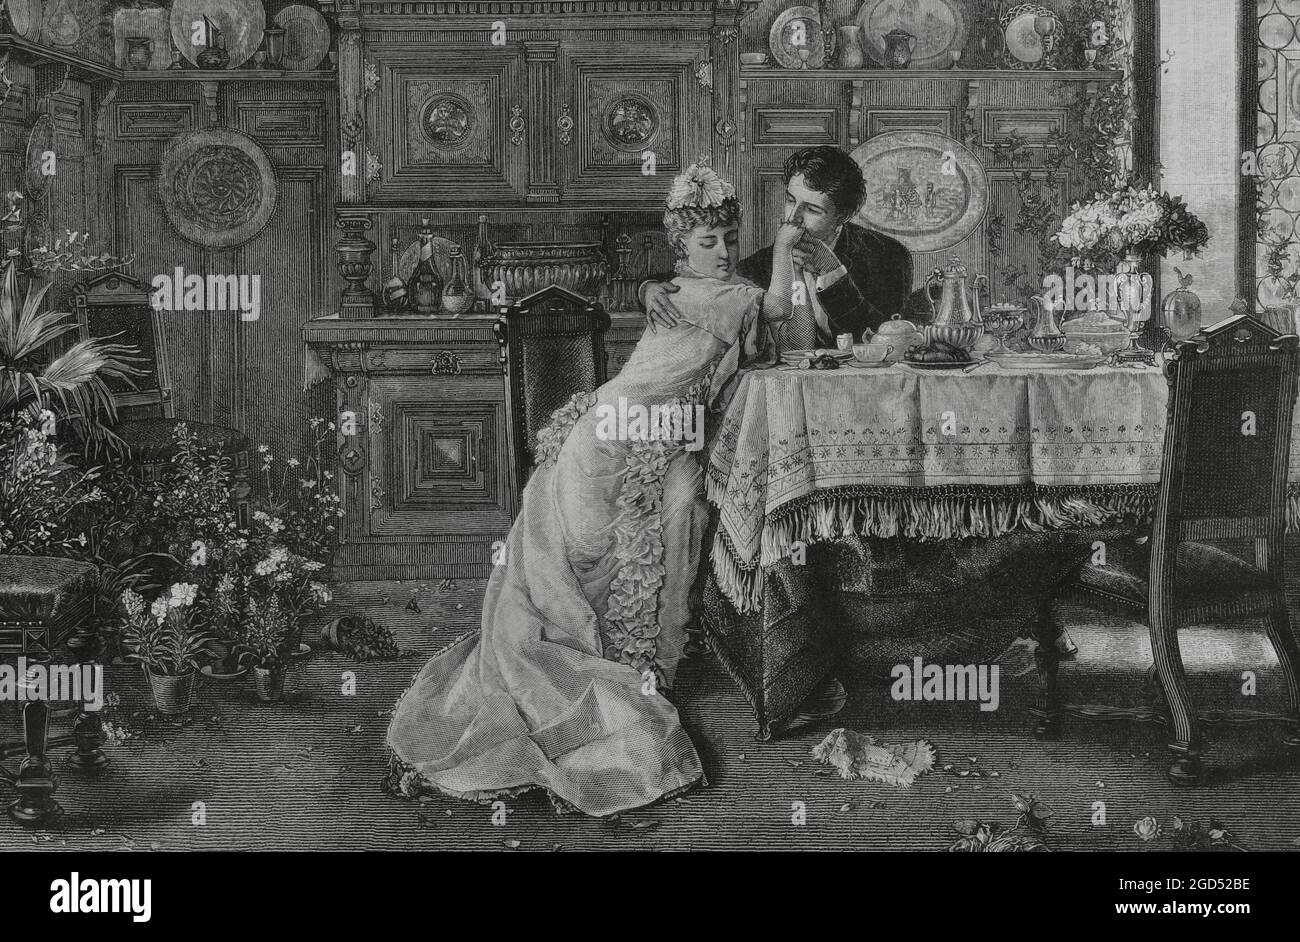 'Honeymoon'. Engraving after a painting by Knut Ekwall (1843-1912). La Ilustración Española y Americana, 1882. Stock Photo